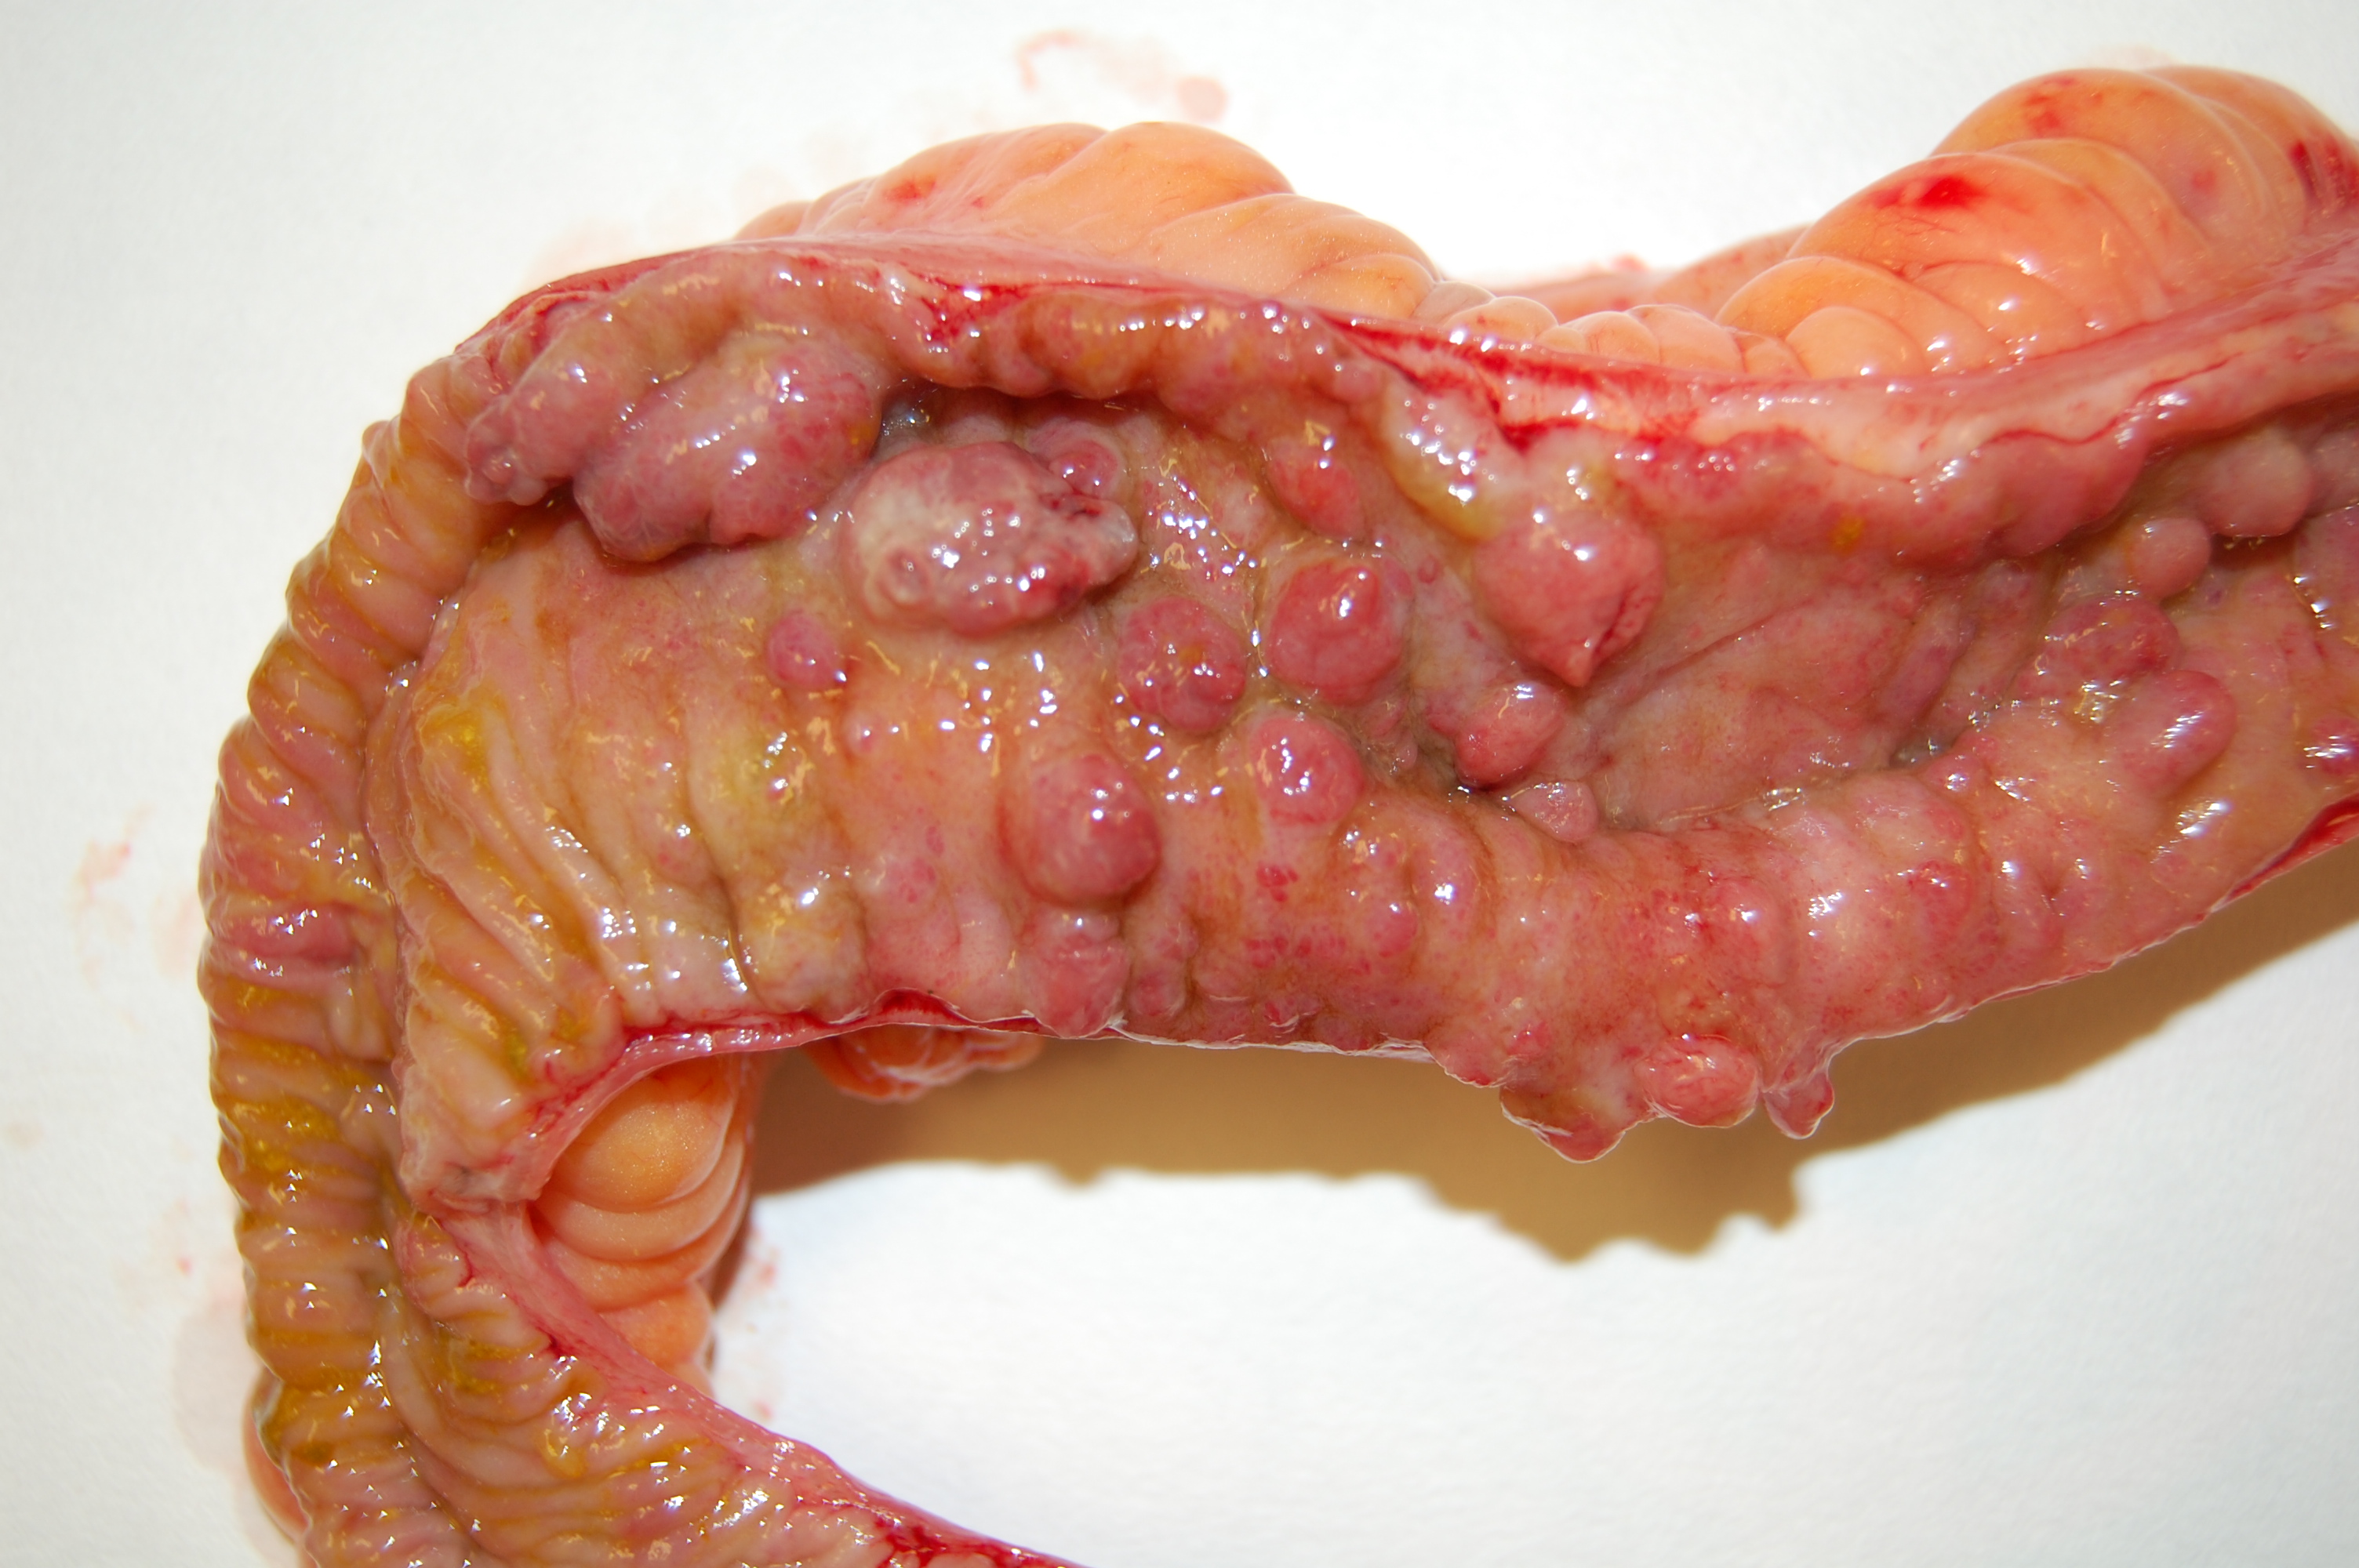 Crohns disease